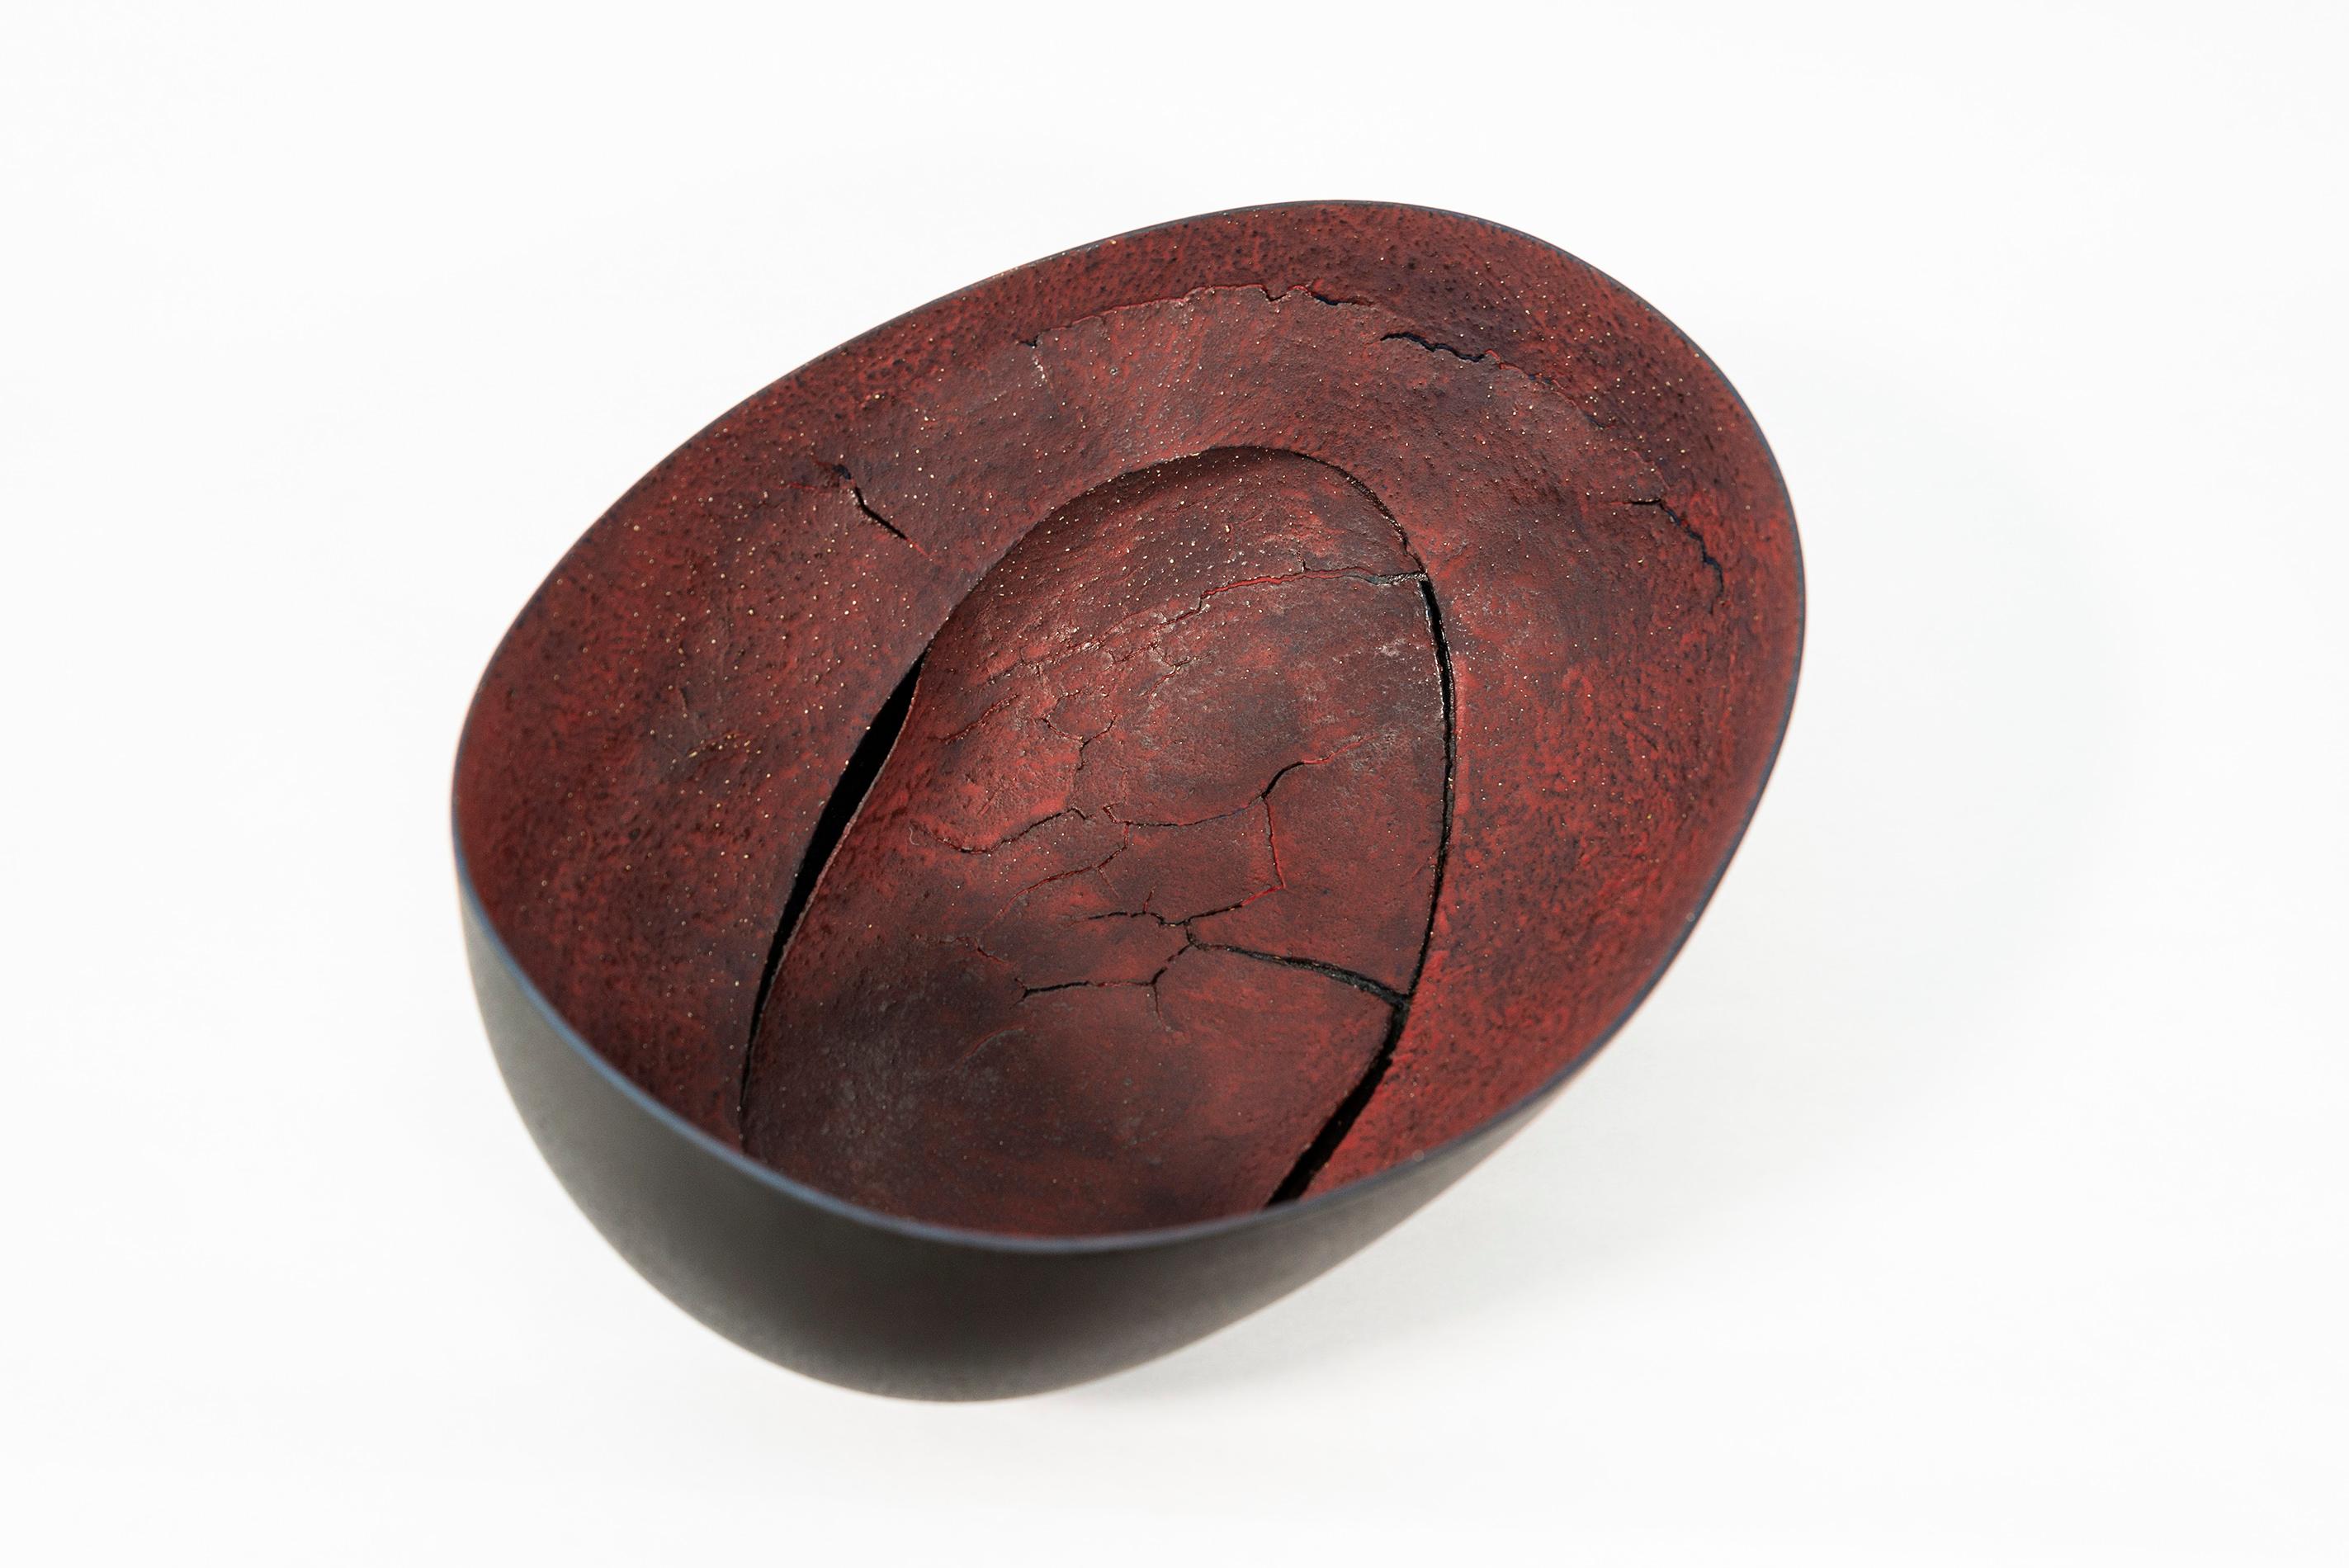 Untitled Bowl (Black) - black, red, nature inspired, textured, ceramic vessel For Sale 8